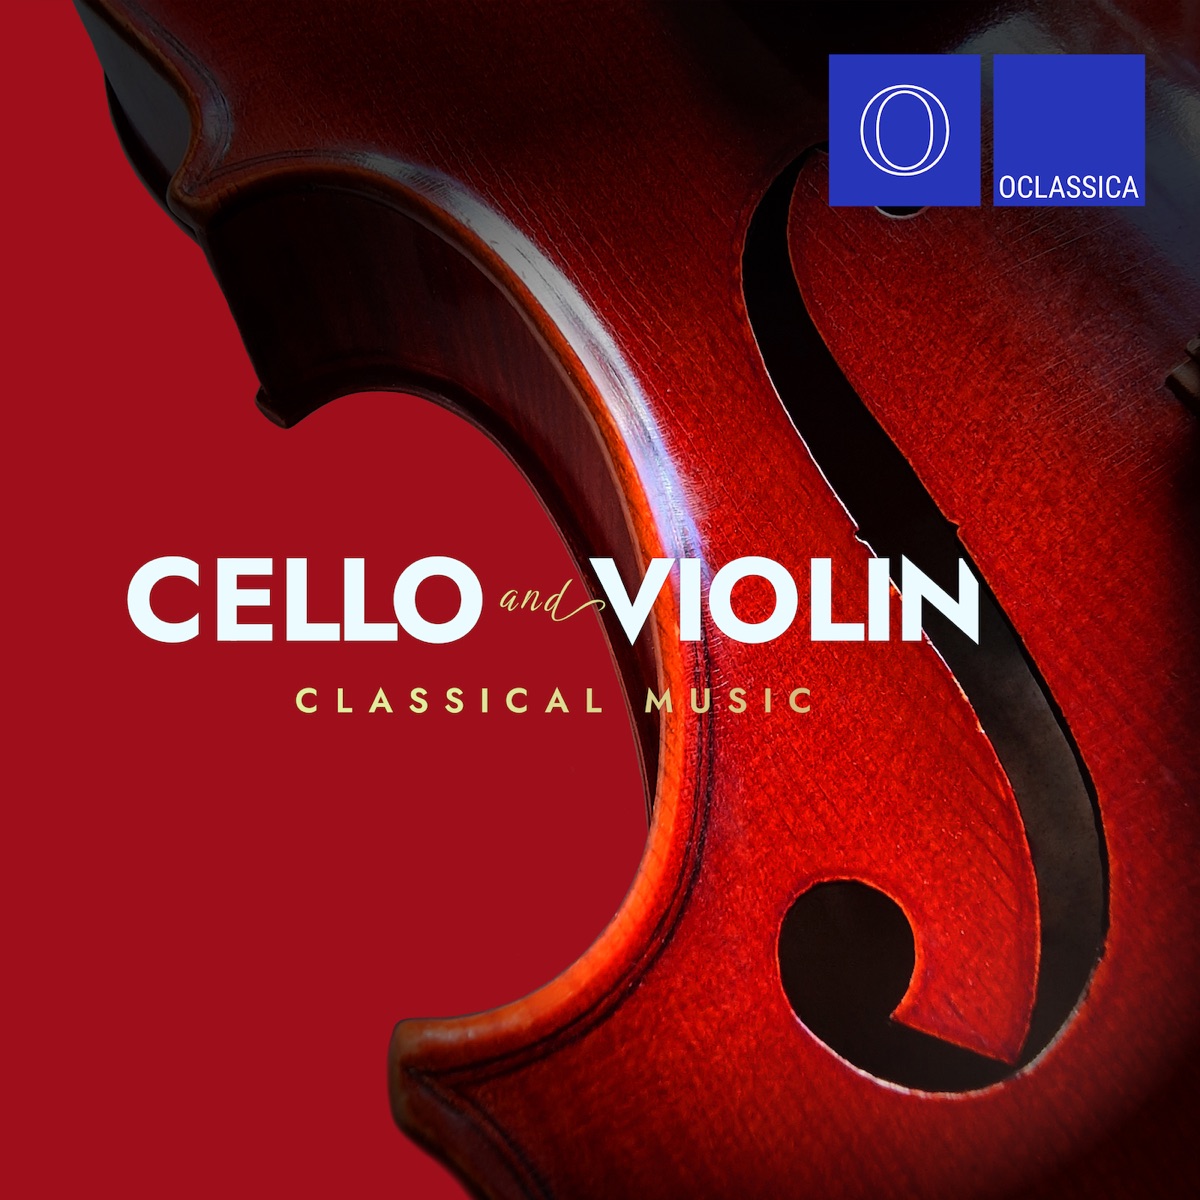 Cello and Violin Classical Music – Album par Multi-interprètes – Apple Music